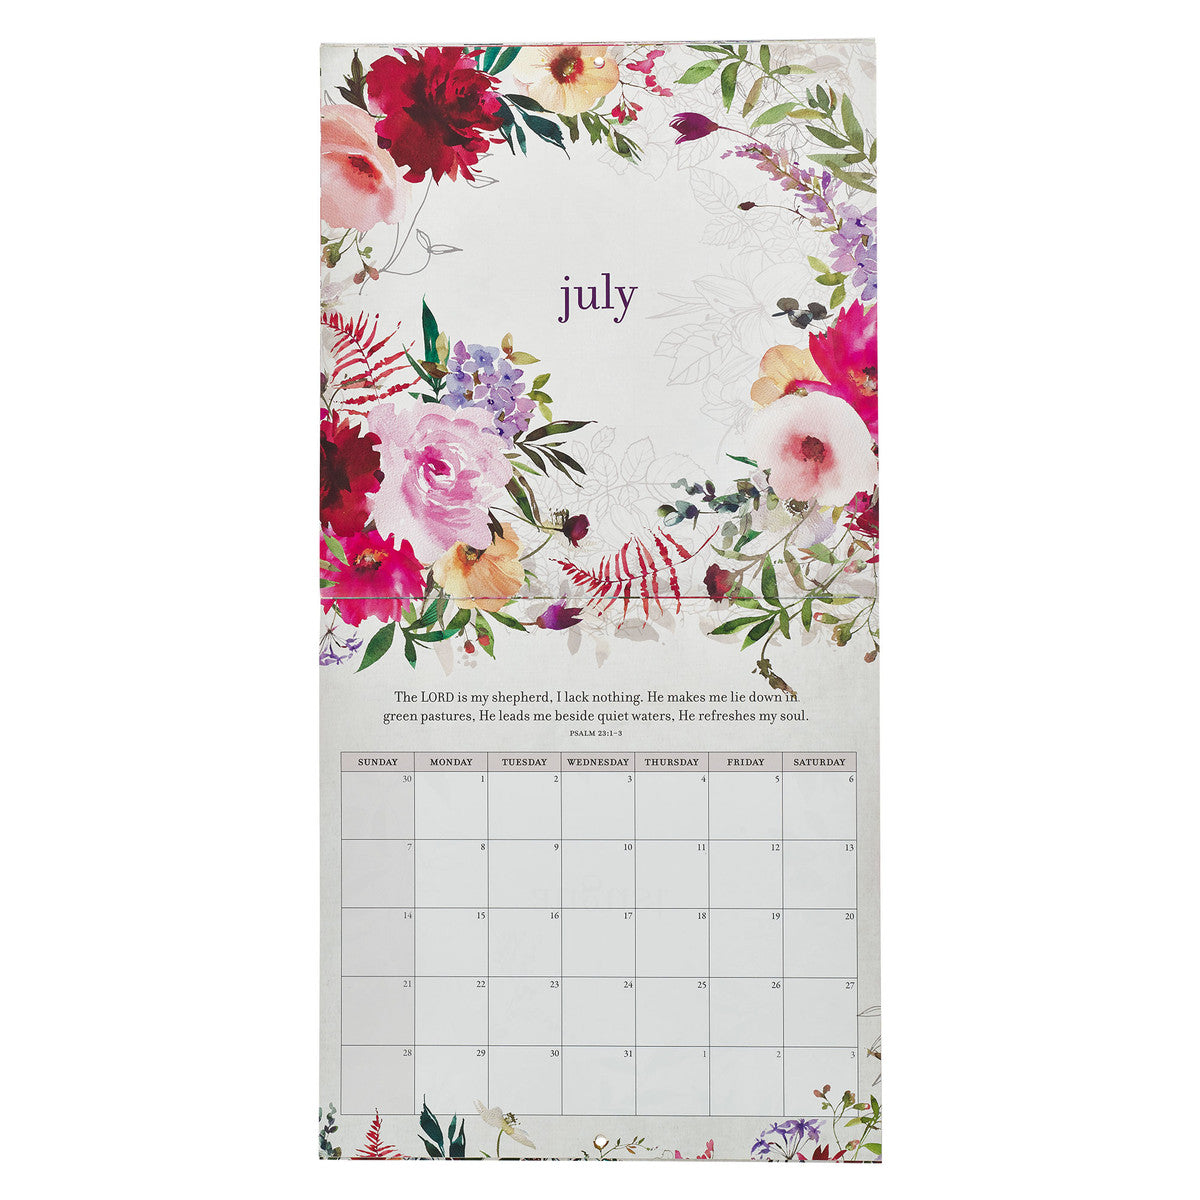 2024 Everything Beautiful Floral Wall Calendar. - Ecclesiastes 3:11